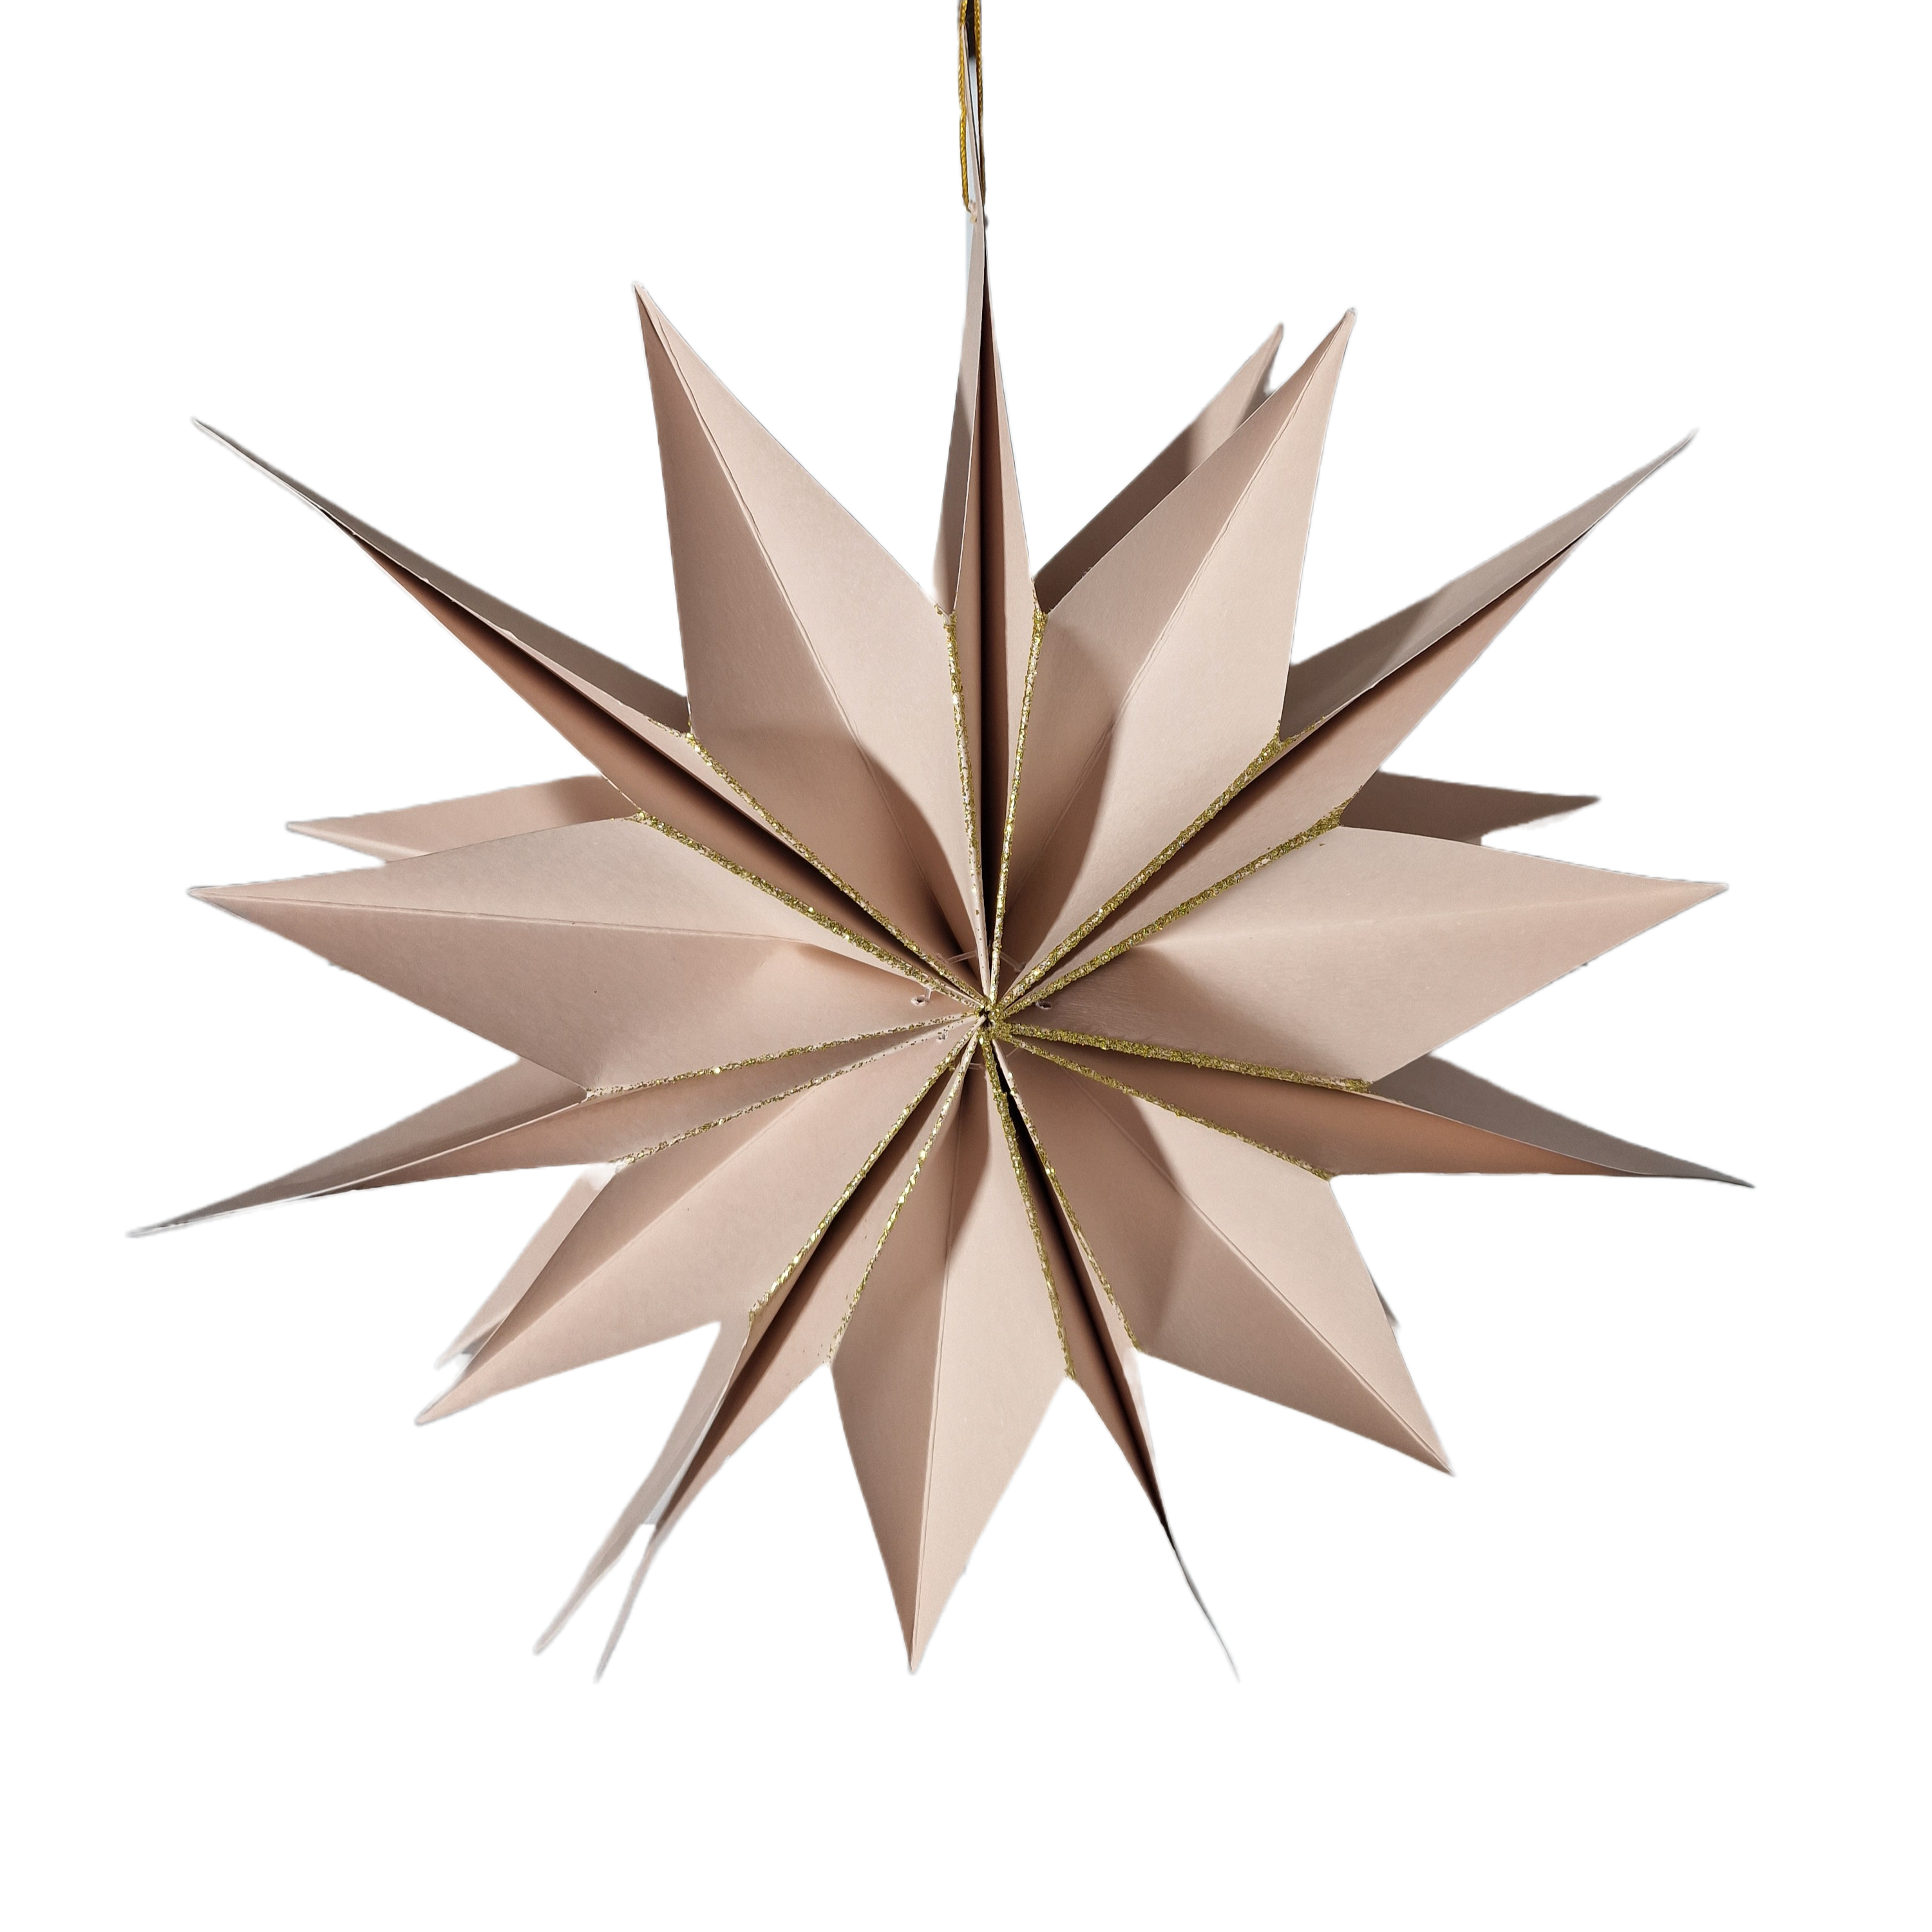 Dekoanhänger Papierstern Faltstern mit Magnetverschluss Stern "Flocke" rosa D30cm, 2019166, 4020607994195, Boltze xmas, Weihnachtsstern 